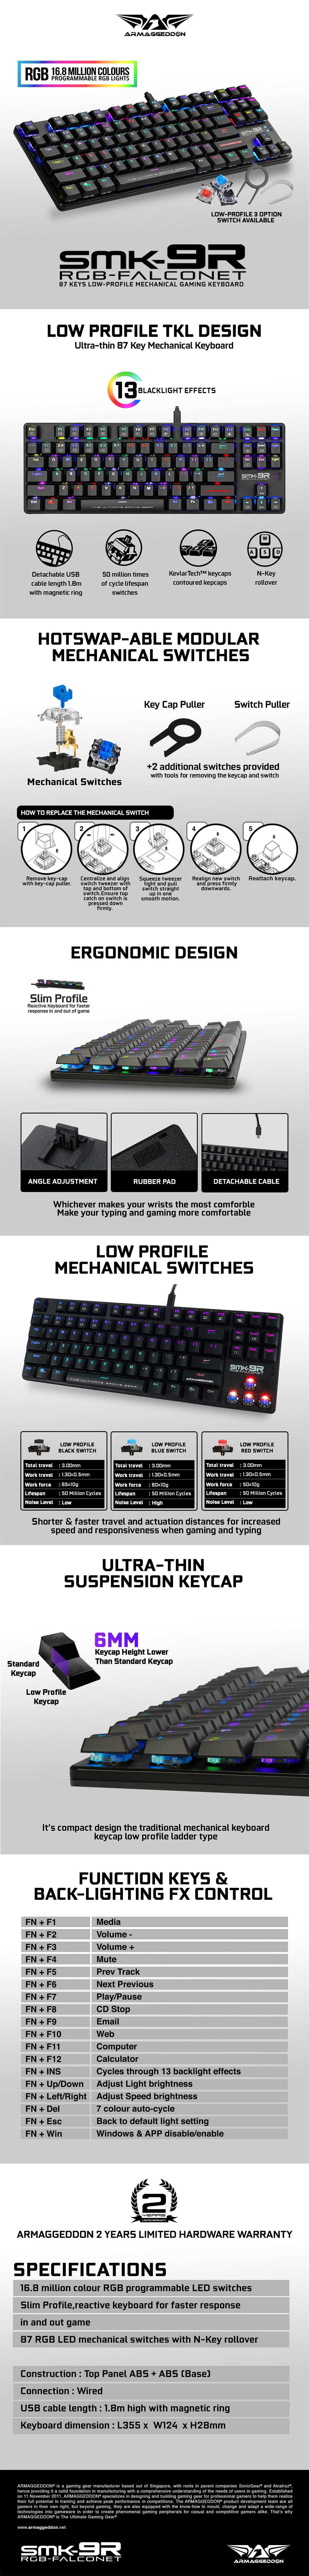 Keyboards-Armaggeddon-SMK-9R-Low-Profile-RGB-Falconet-Switch-Mechanical-Gaming-Keyboard-Black-3